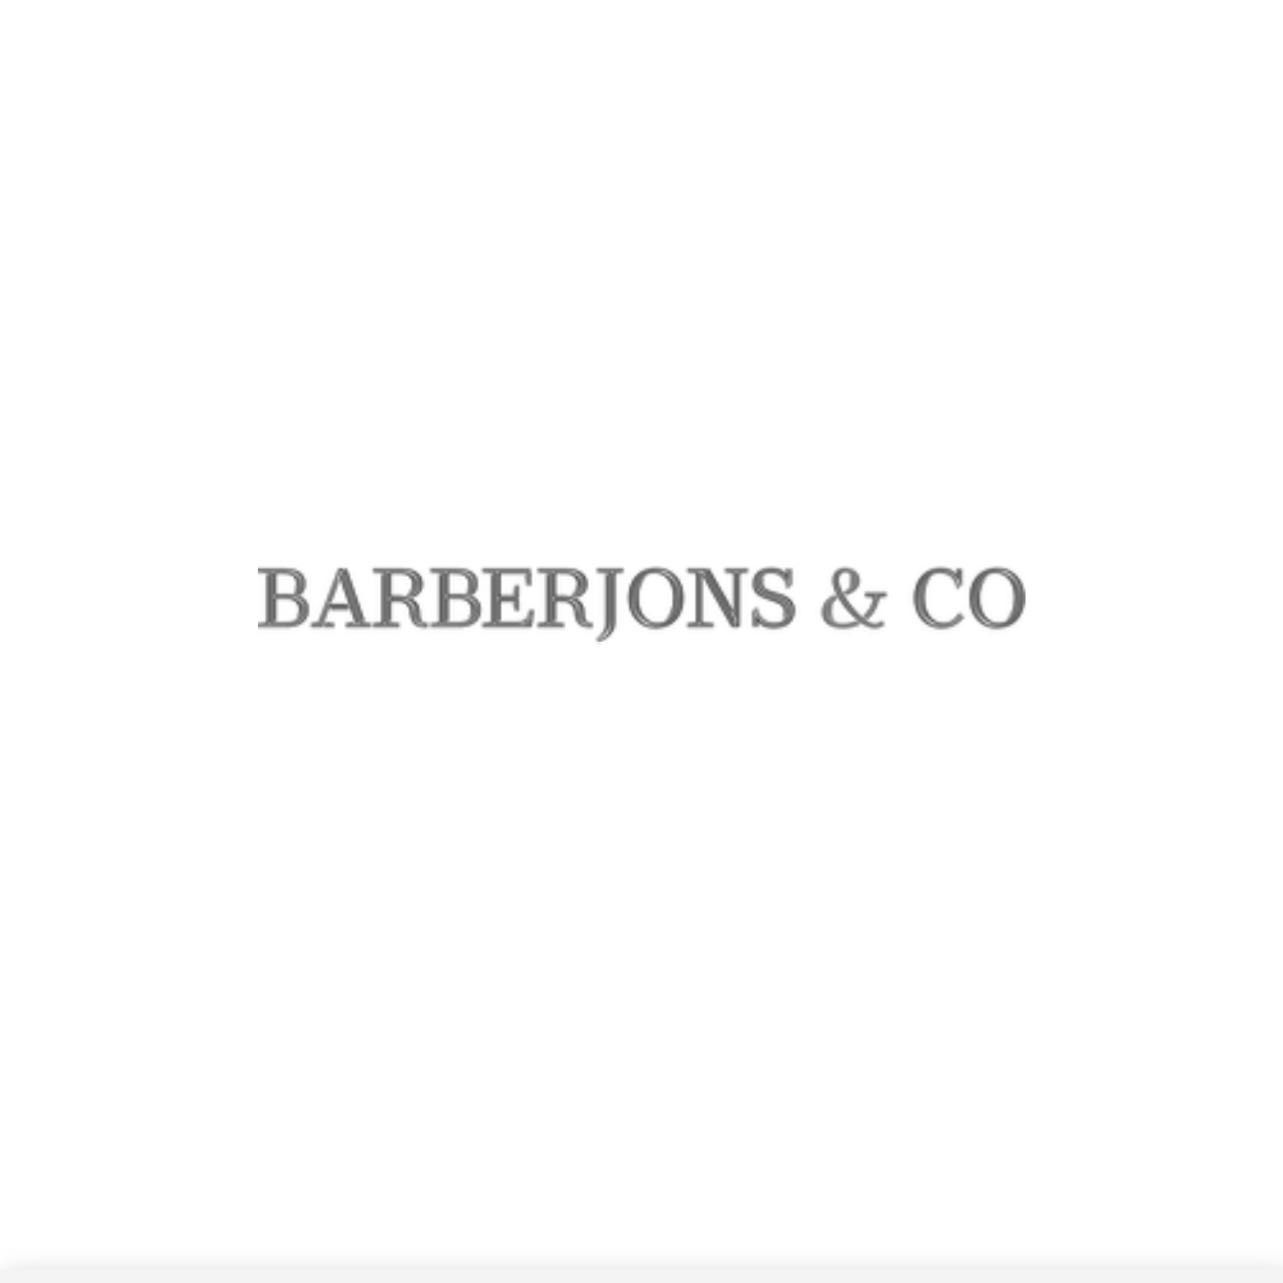 BarberJons & Co, 90 Worcester road, WR14 1NY, Great Malvern